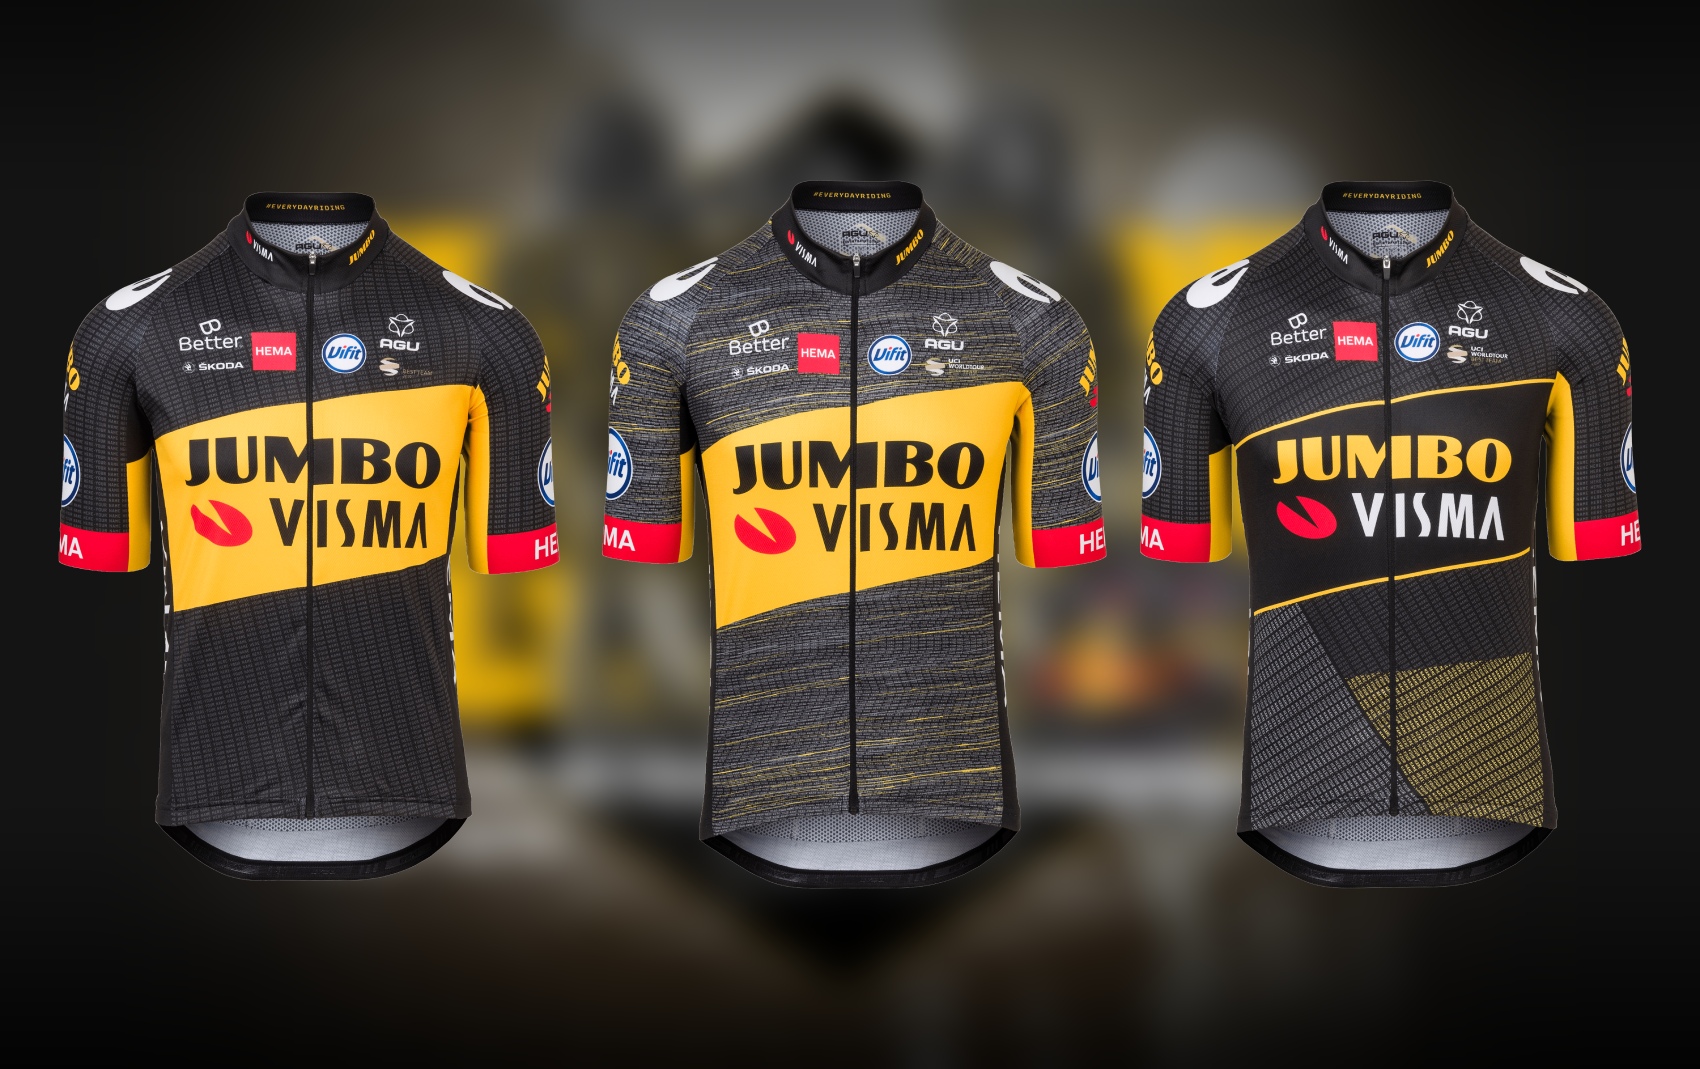 JumboVisma open fan vote to decide Tour de France jersey design